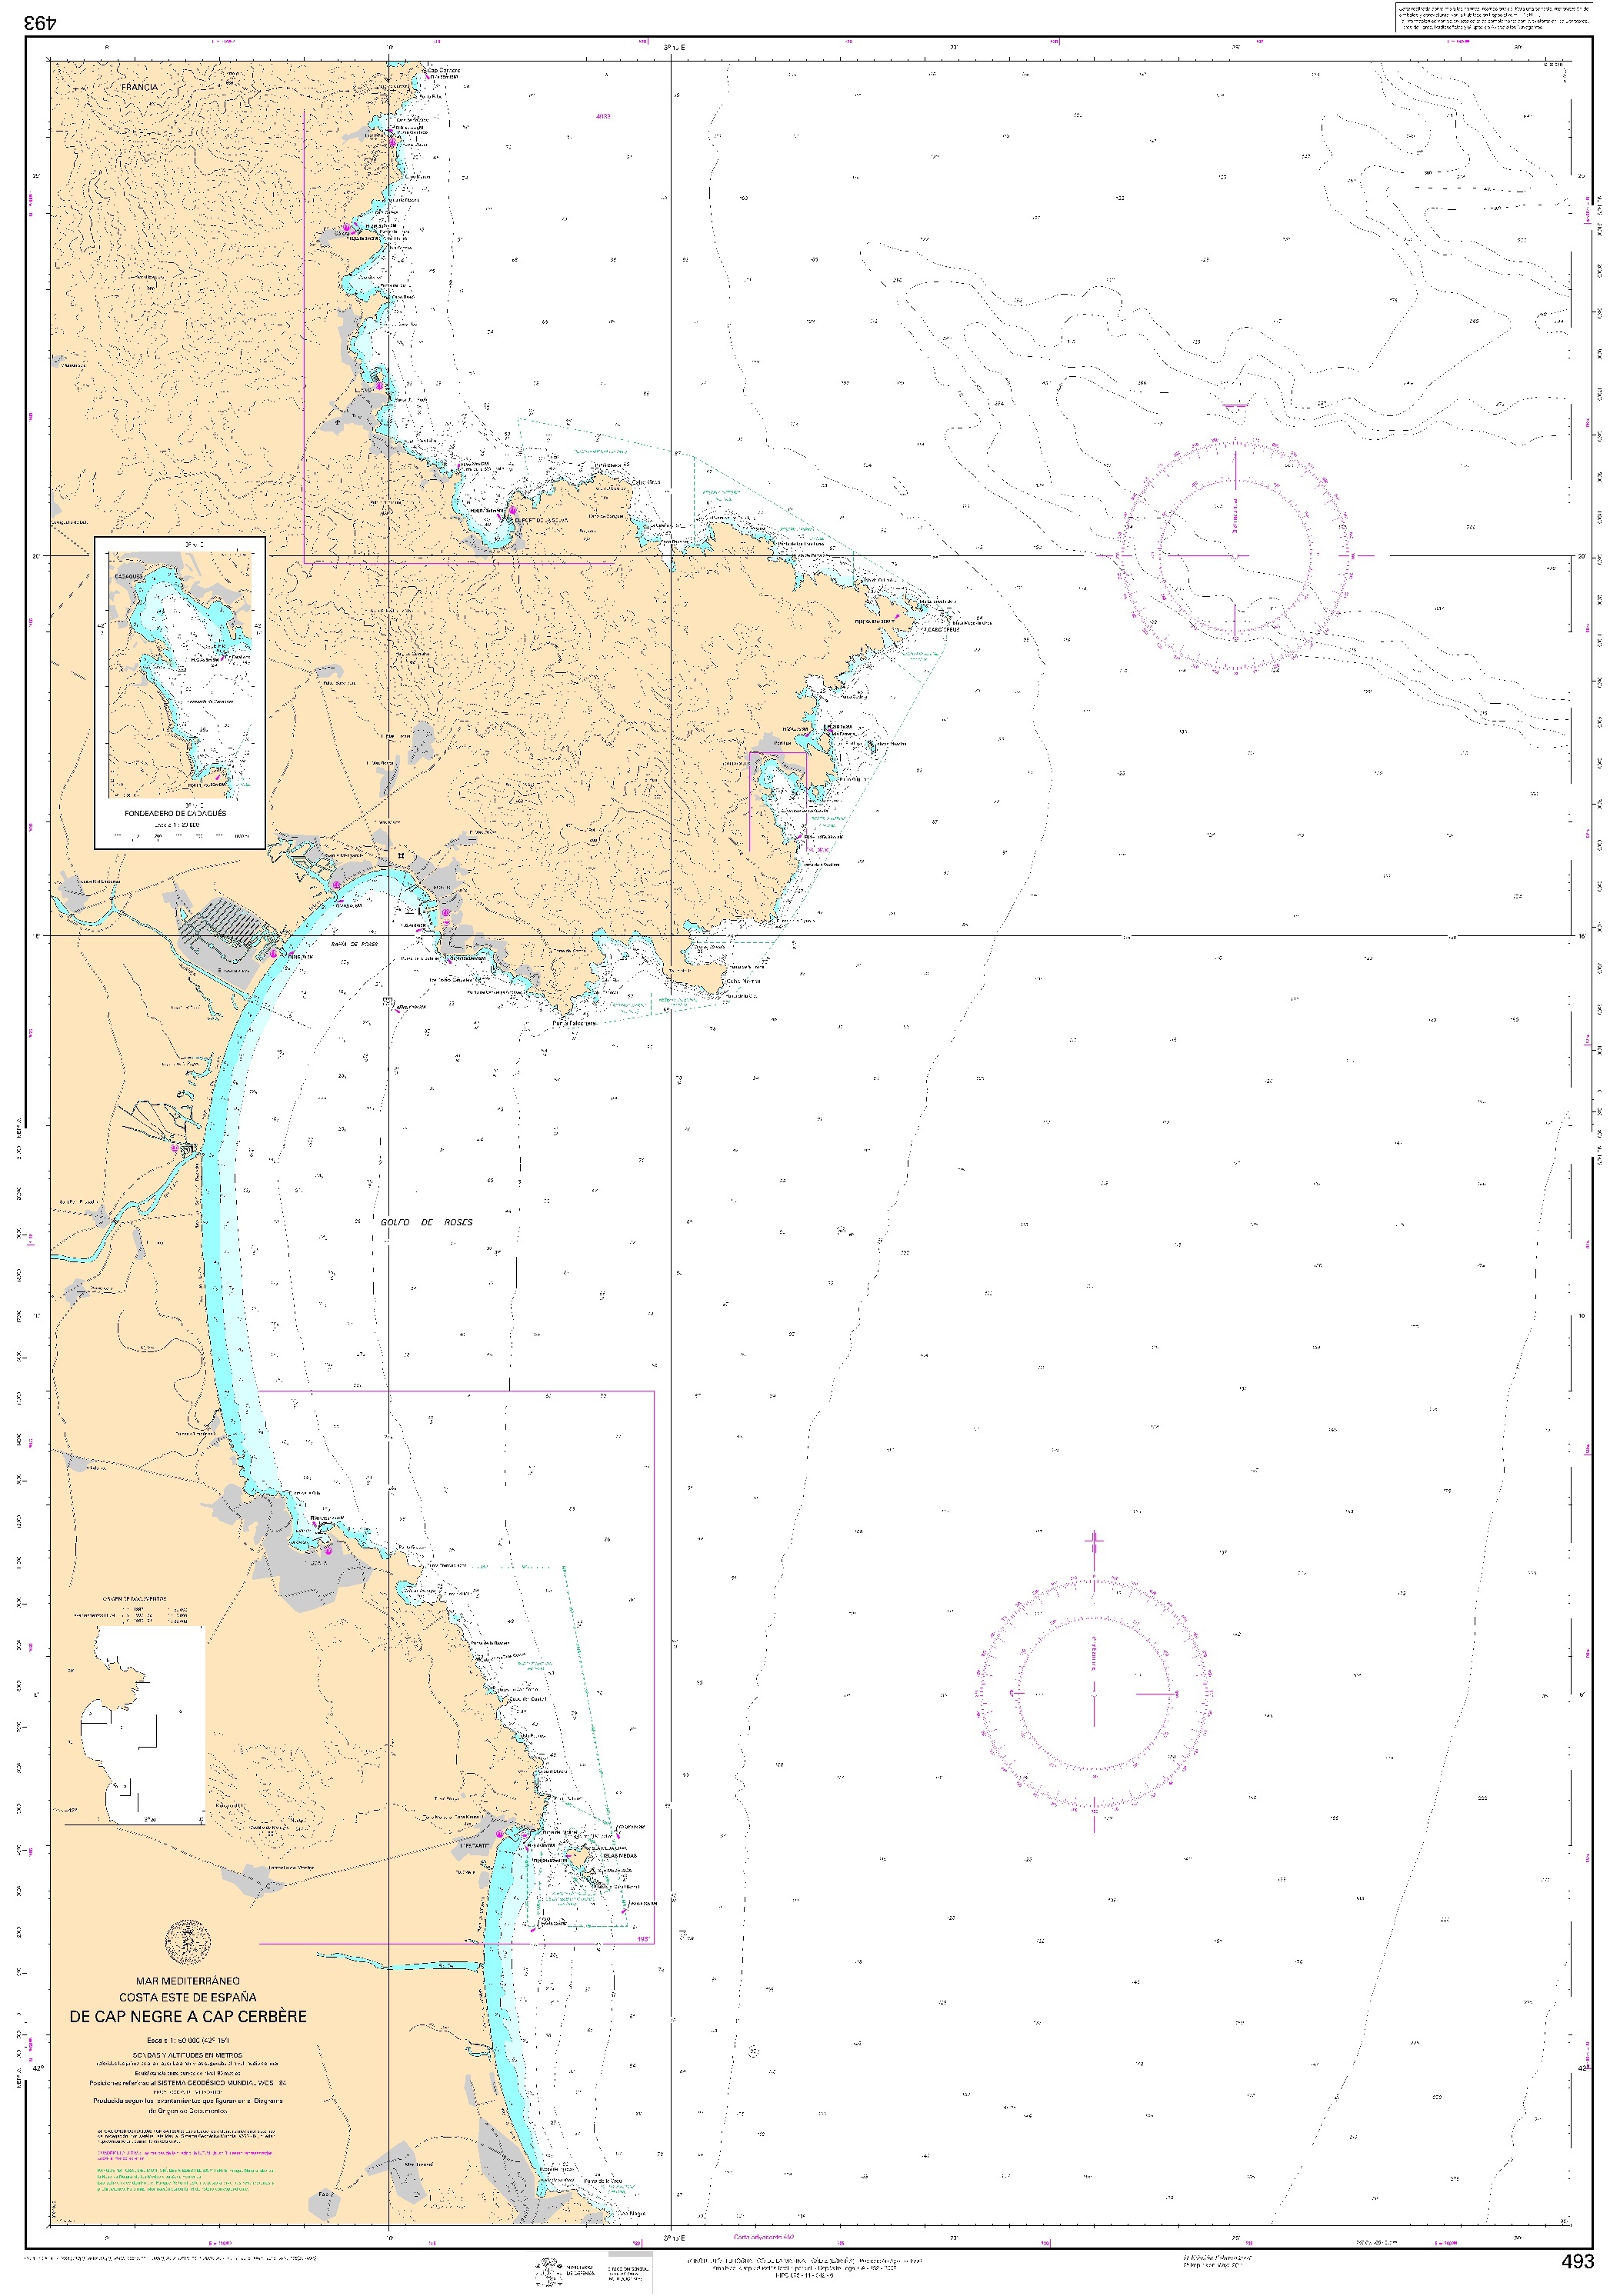 493 De cap Negre a cap Cerbère (planos insertos: Puerto de Llançá. Fondeadero de Cadaqués) ". 1:50000. 1:50000"